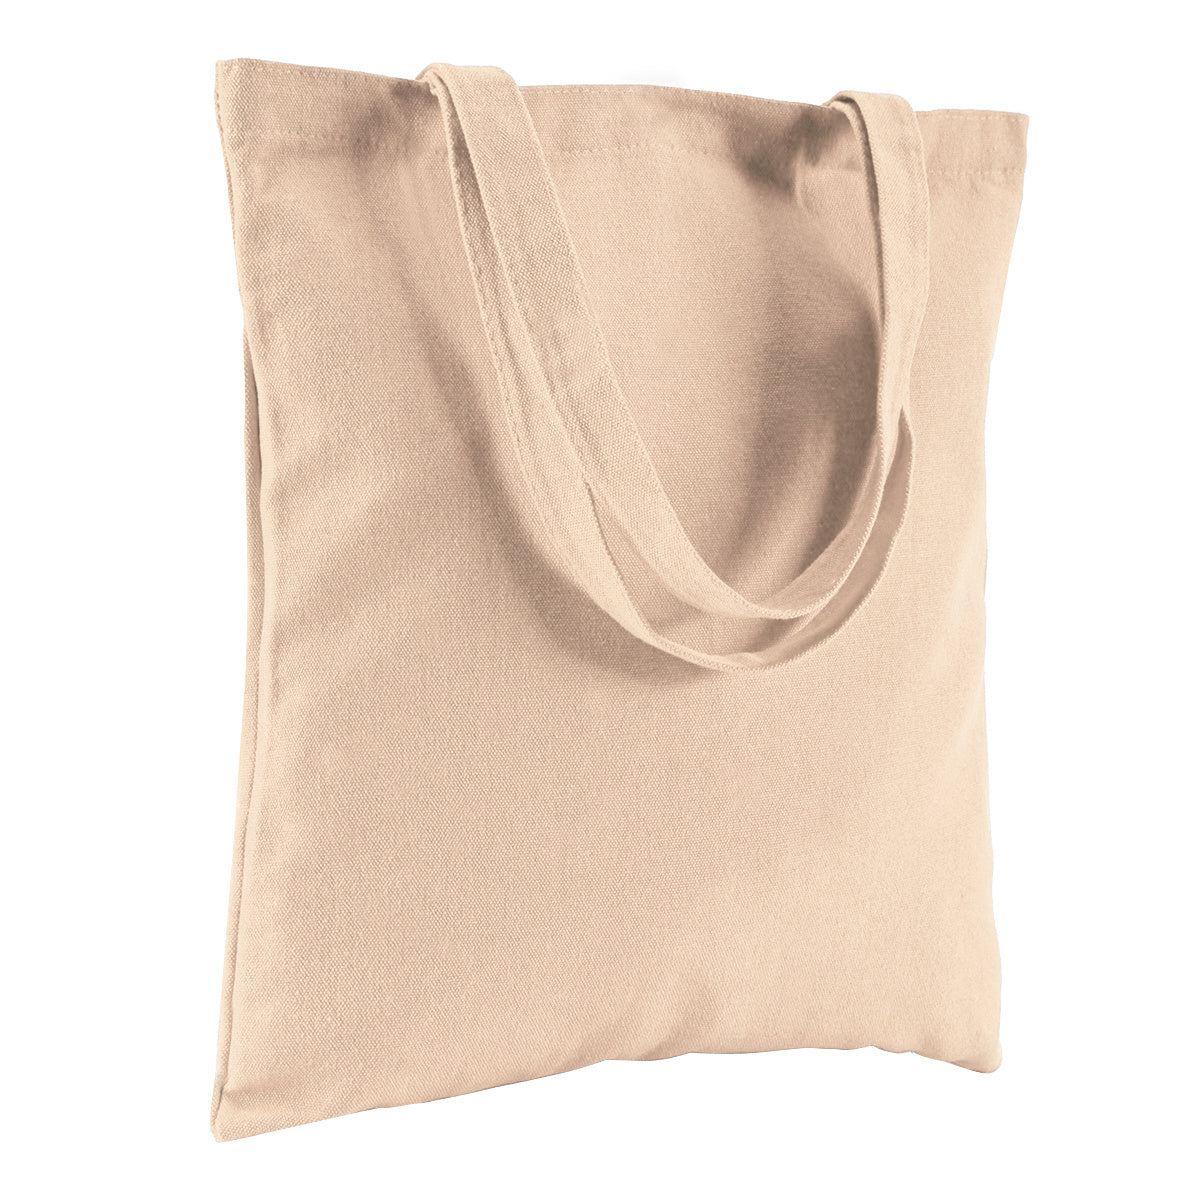 Reusable Cotton Blend Tote Bag, Natural beige color